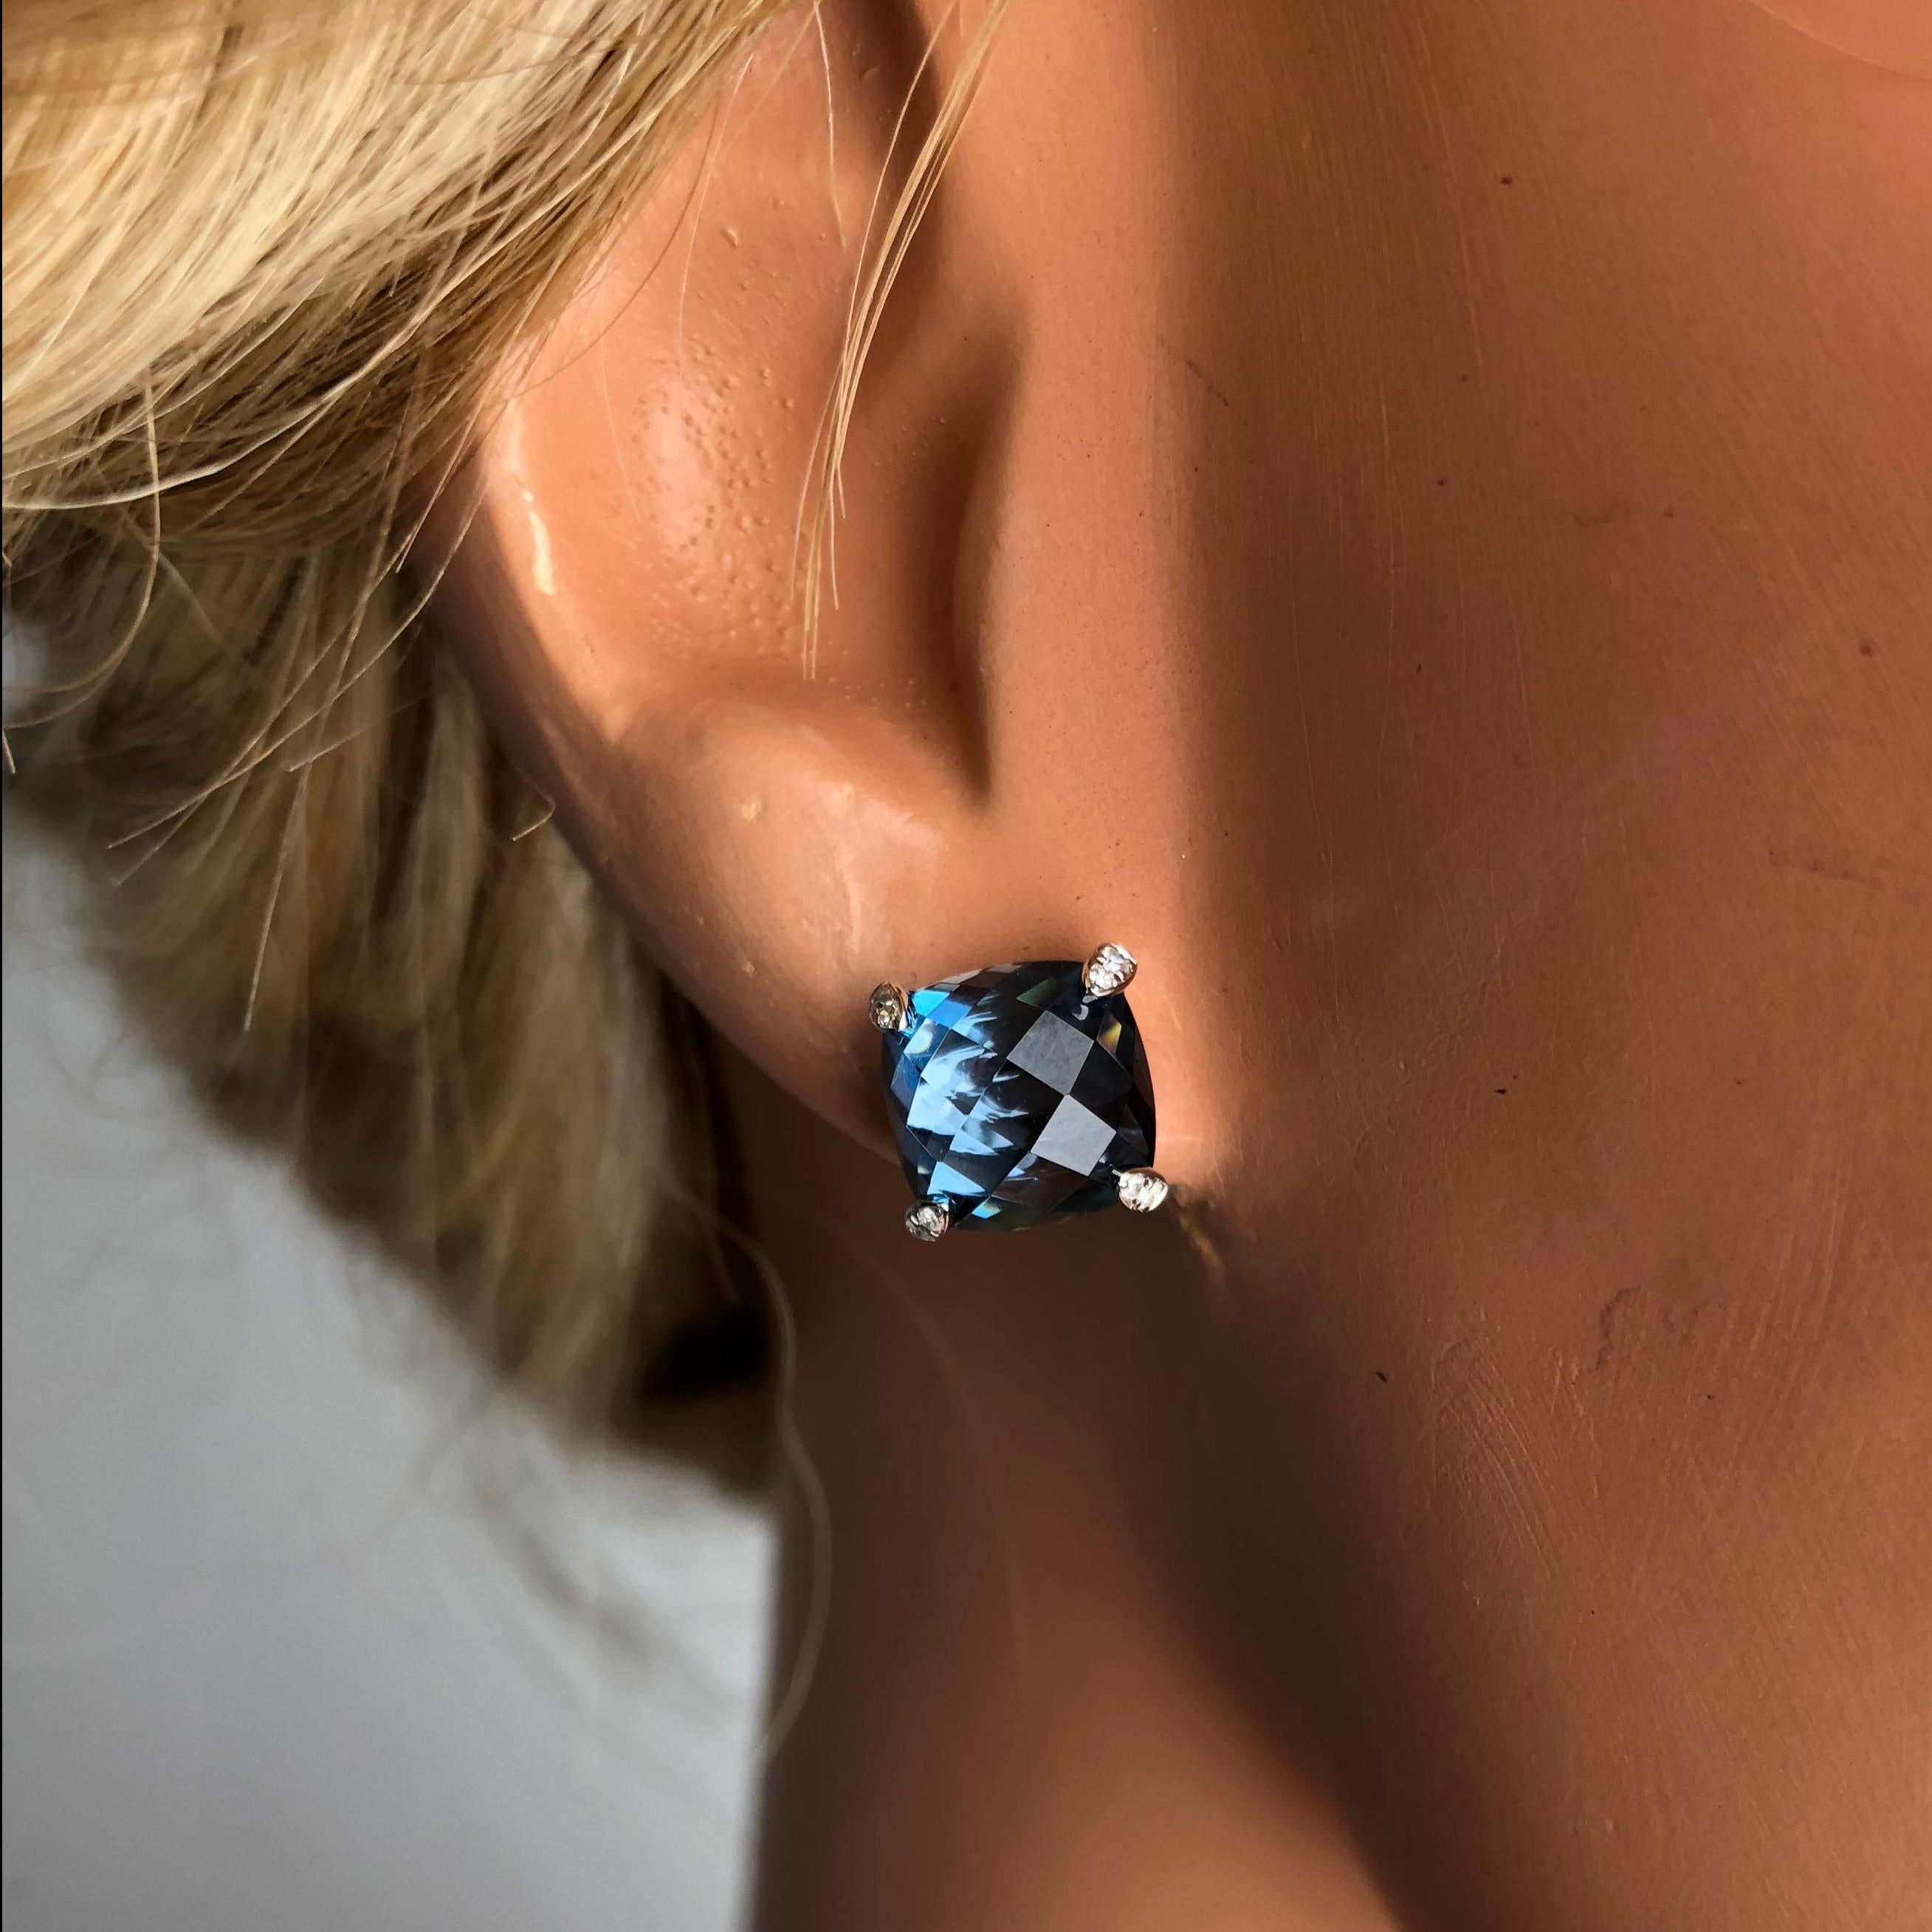 Contemporary DiamondTown 7.92 Carat London Blue Topaz Earrings in 14 Karat White Gold